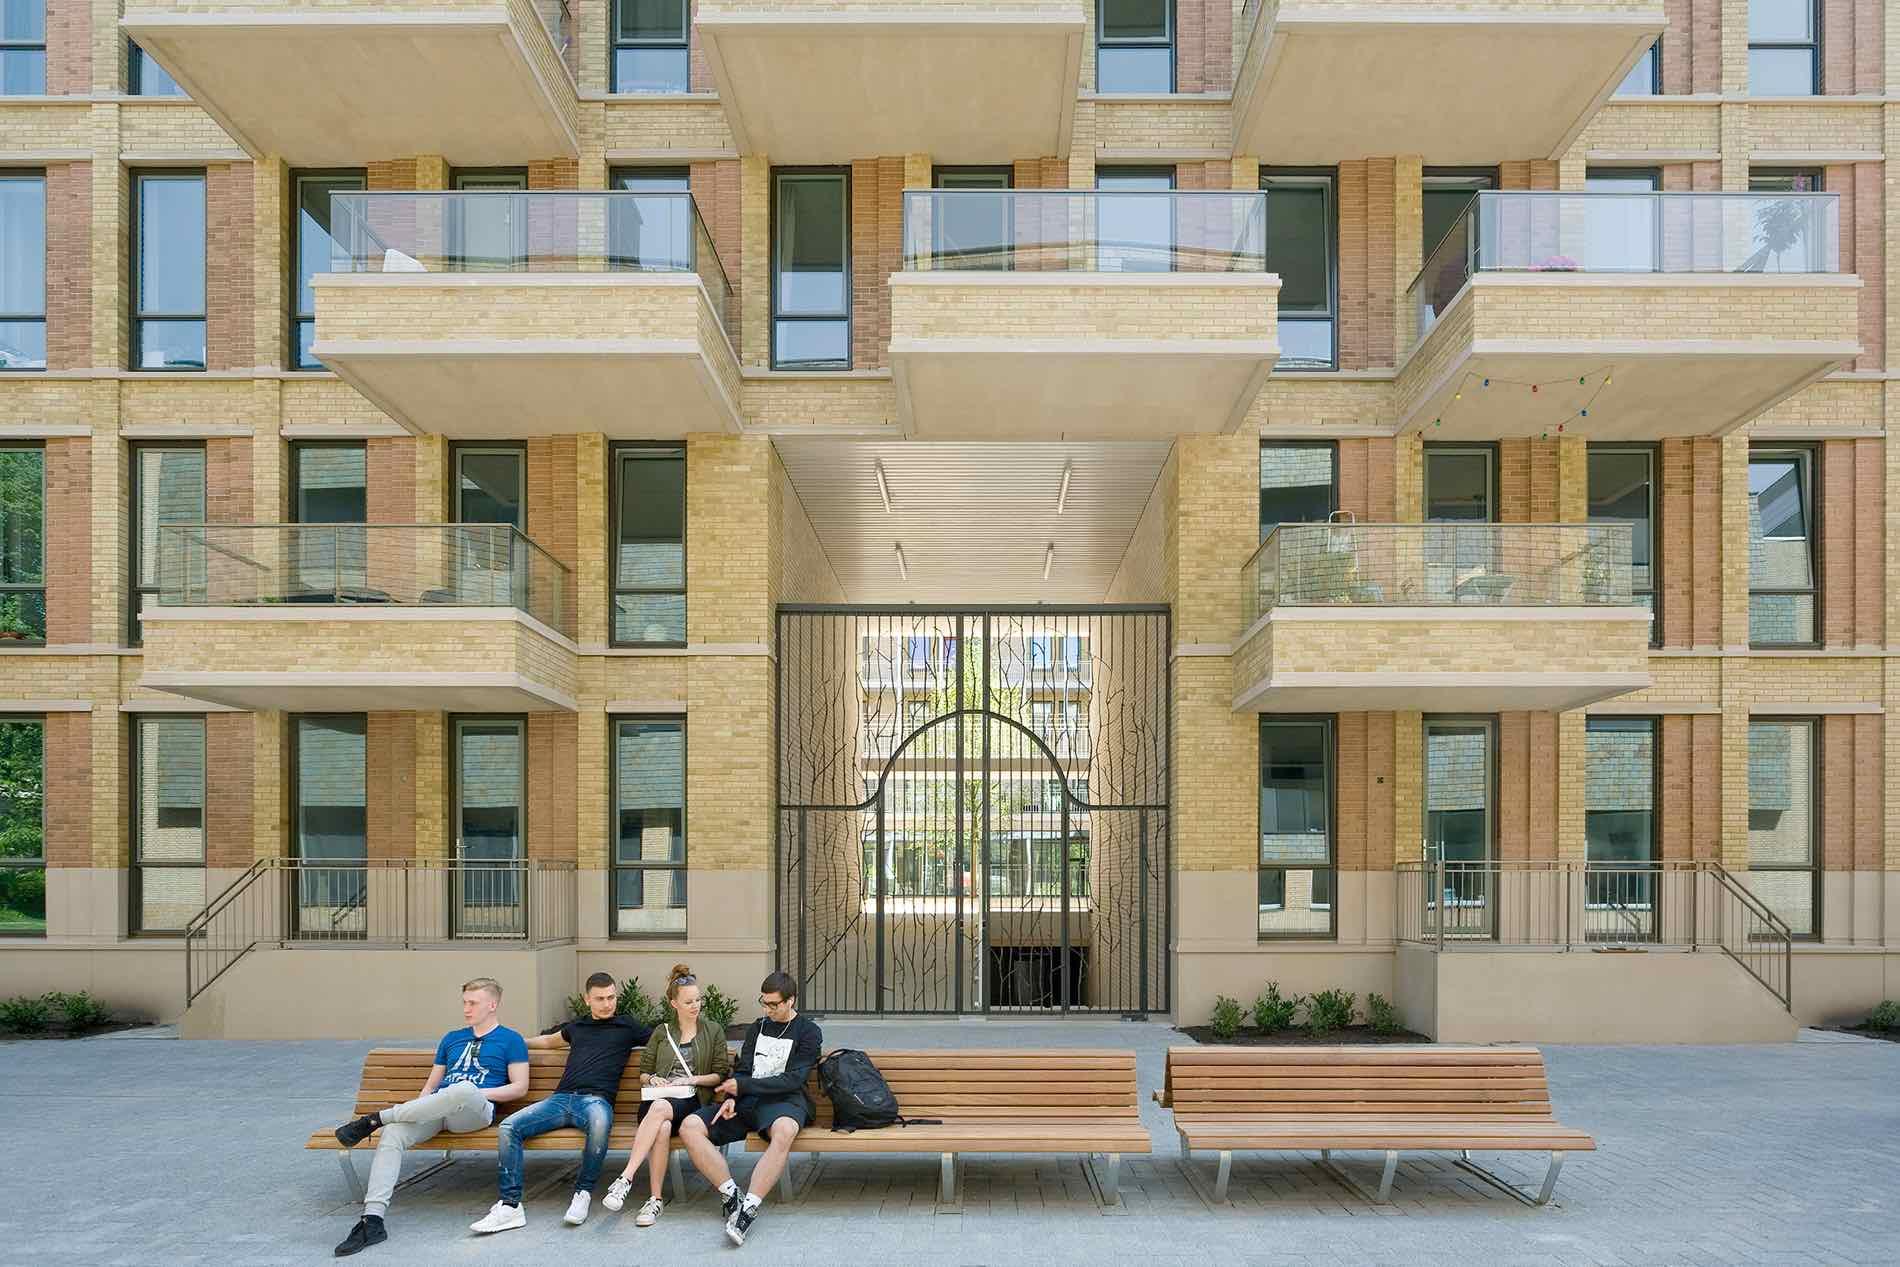 Appartementen Square 3, Amsterdam - LEVS architecten